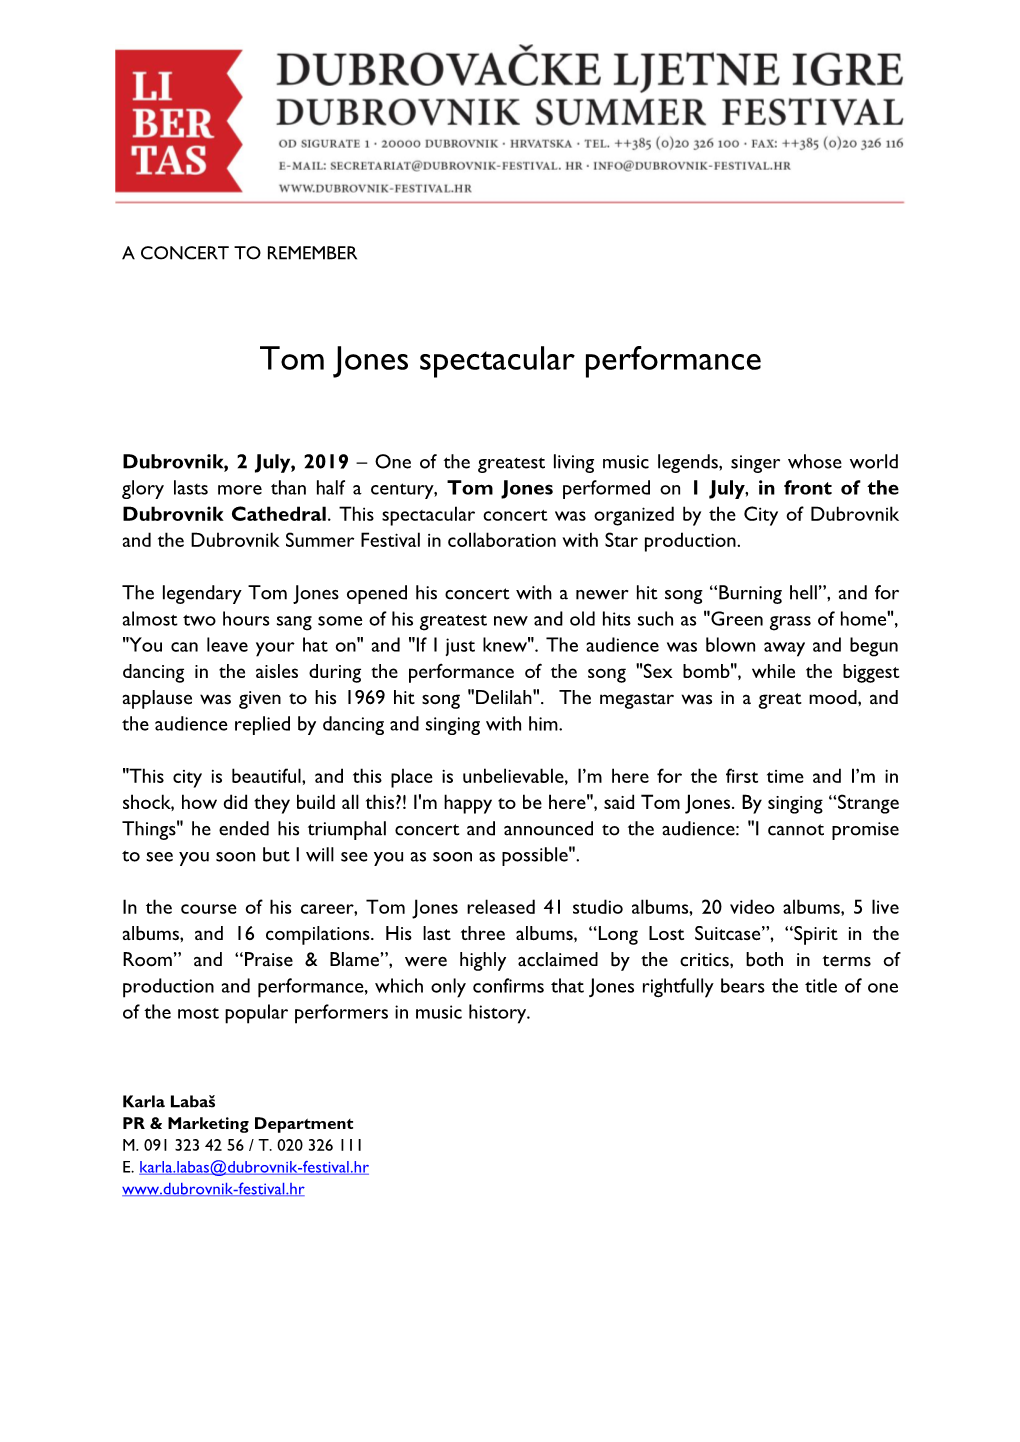 Tom Jones Spectacular Performance